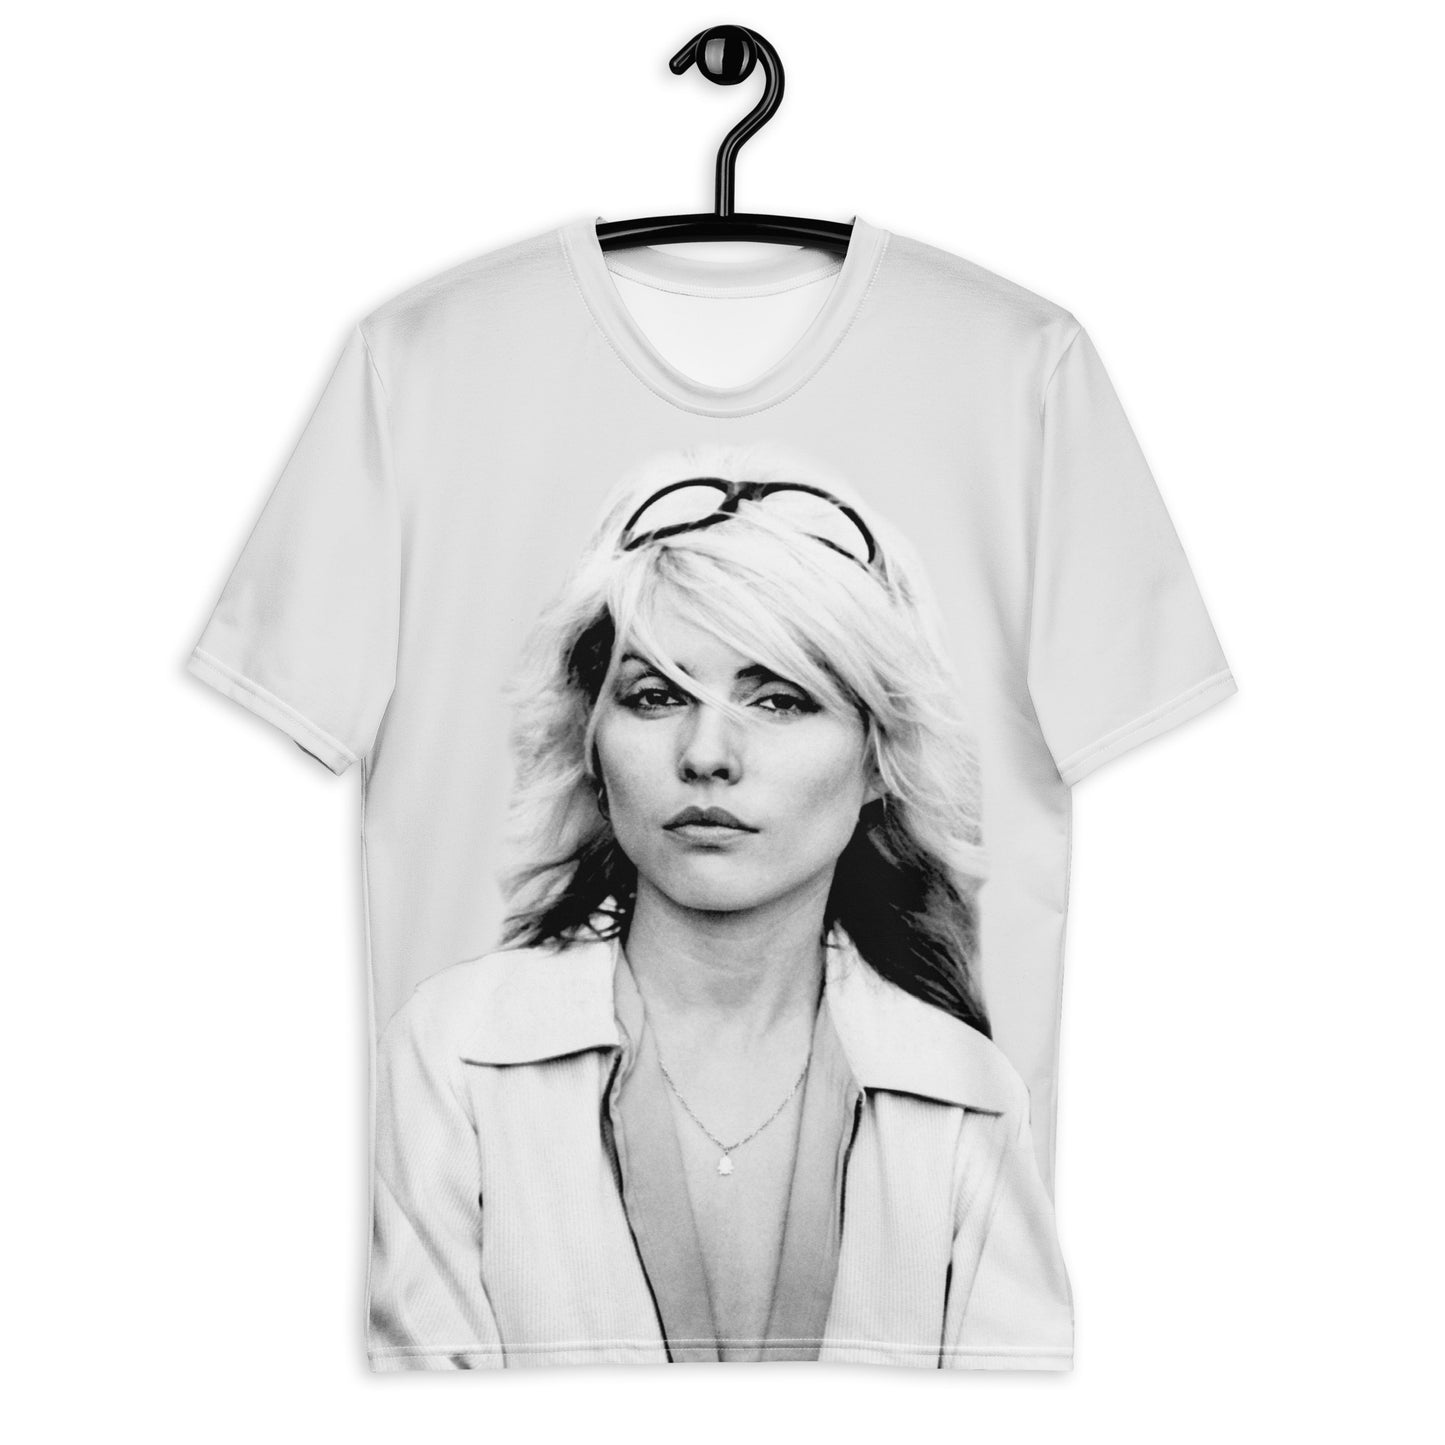 Debbie Harry KiSS Large Print t-shirt - Blondie punk icon music